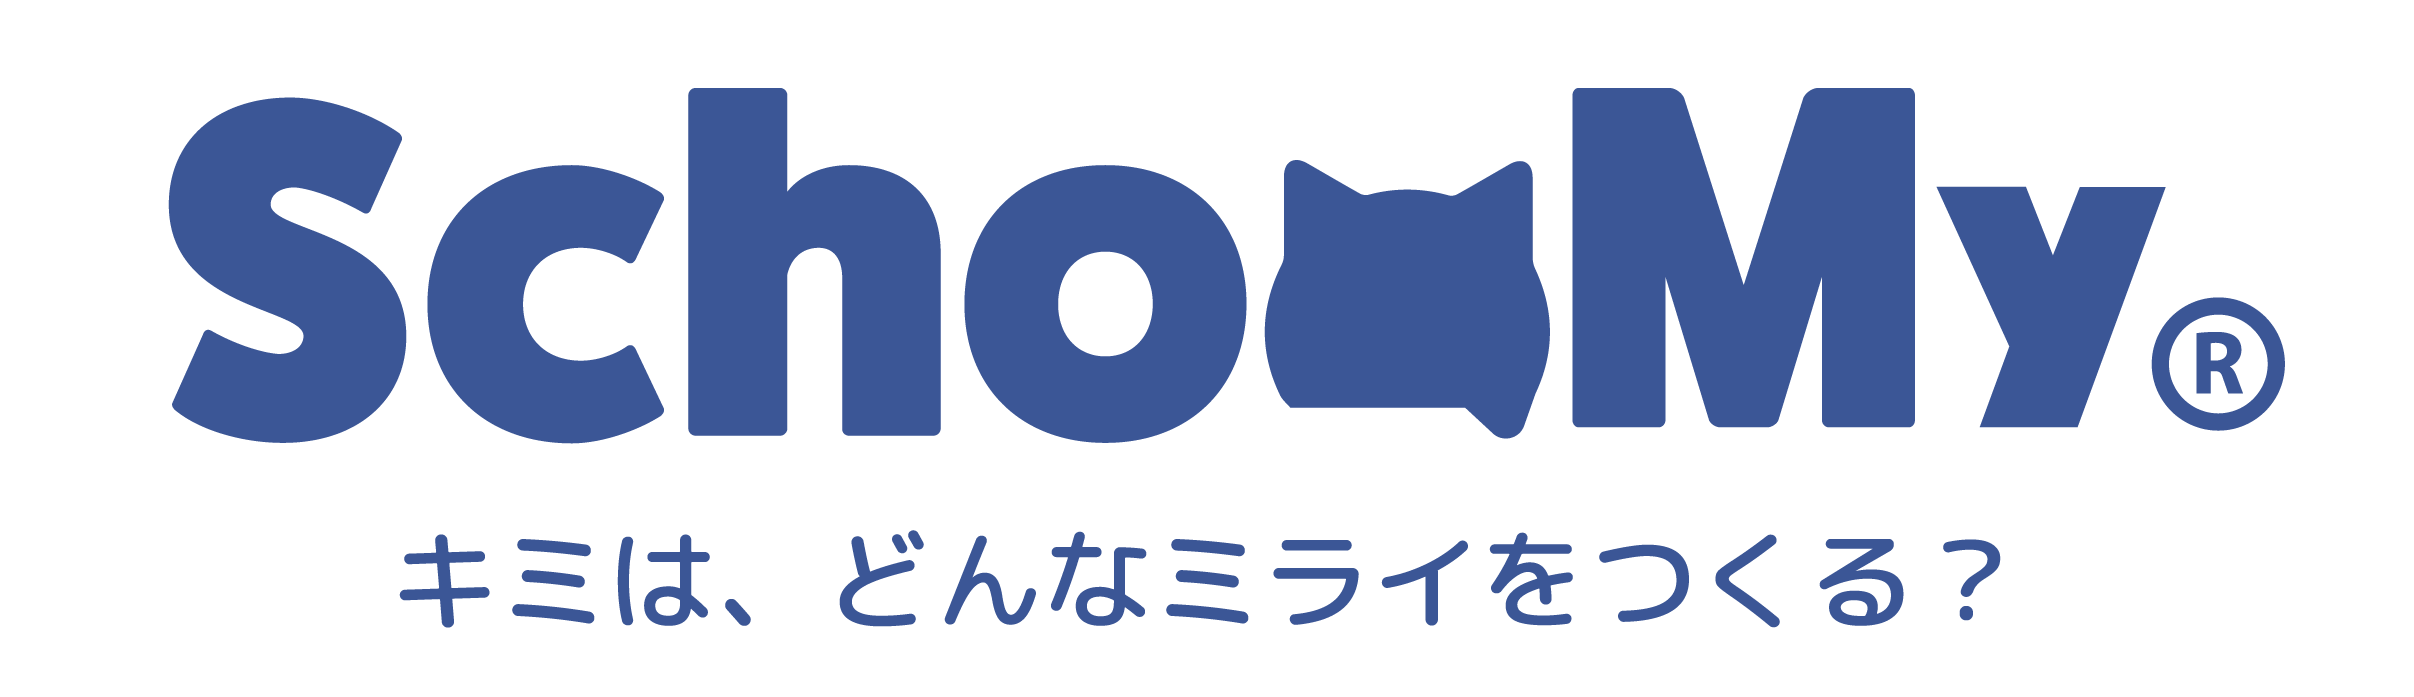 SchooMy_logo_blue2